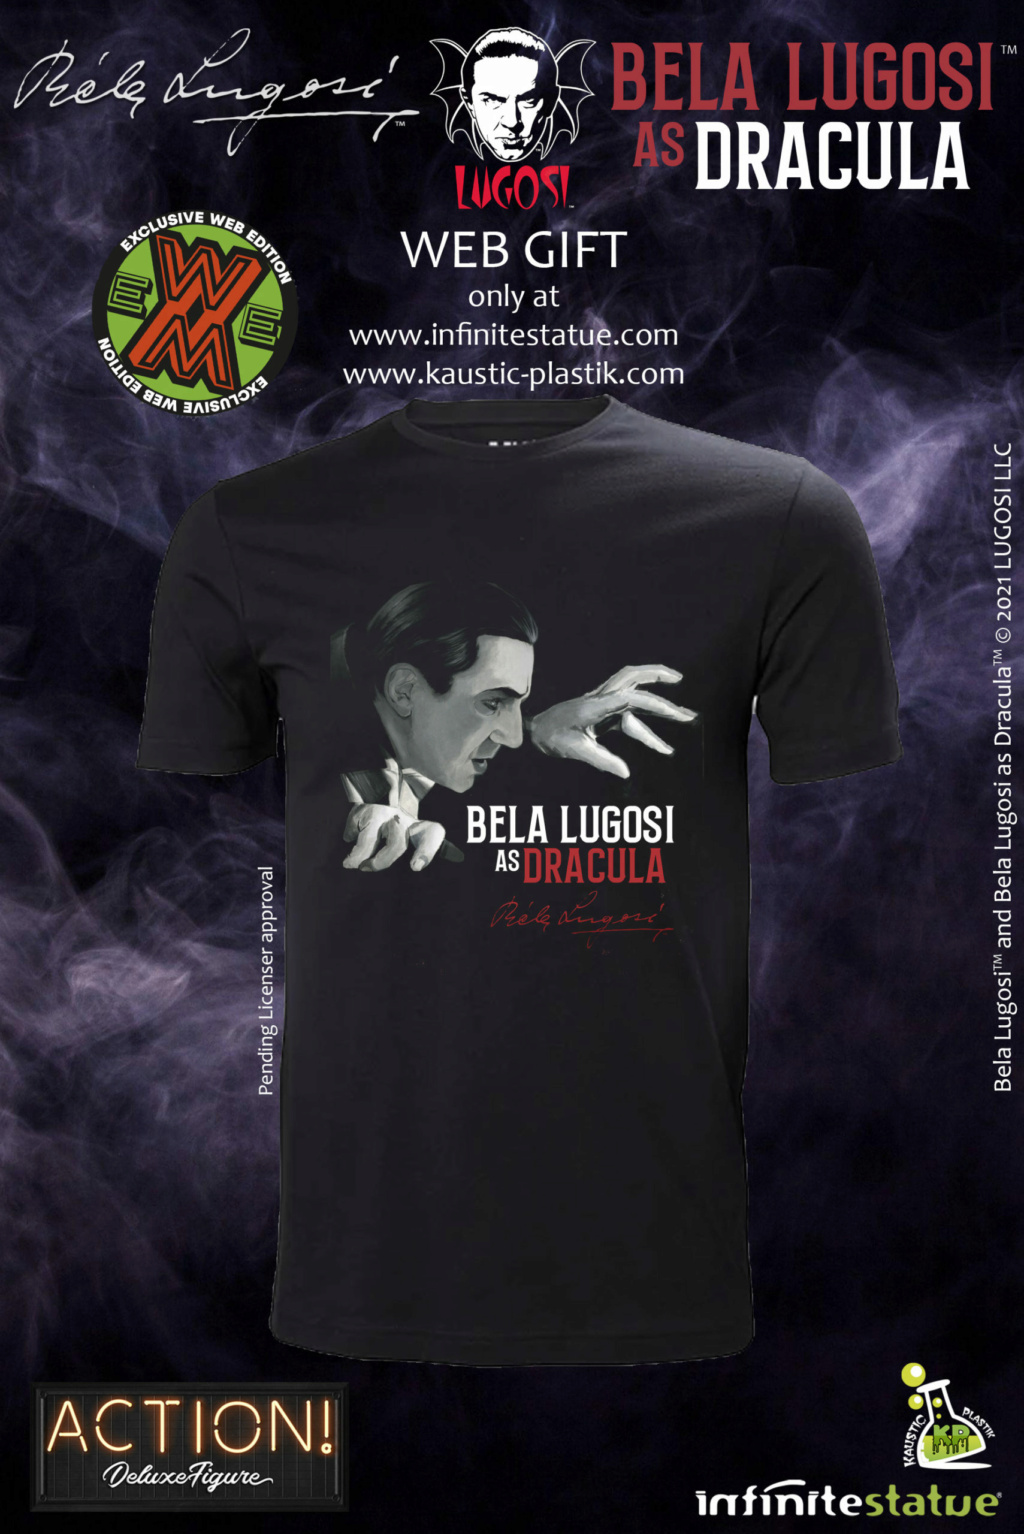 NEW PRODUCT: Kaustic Plastik & Infinite Statue: Bela Lugosi as Dracula (standard, deluxe & exclusive) action figure 7474